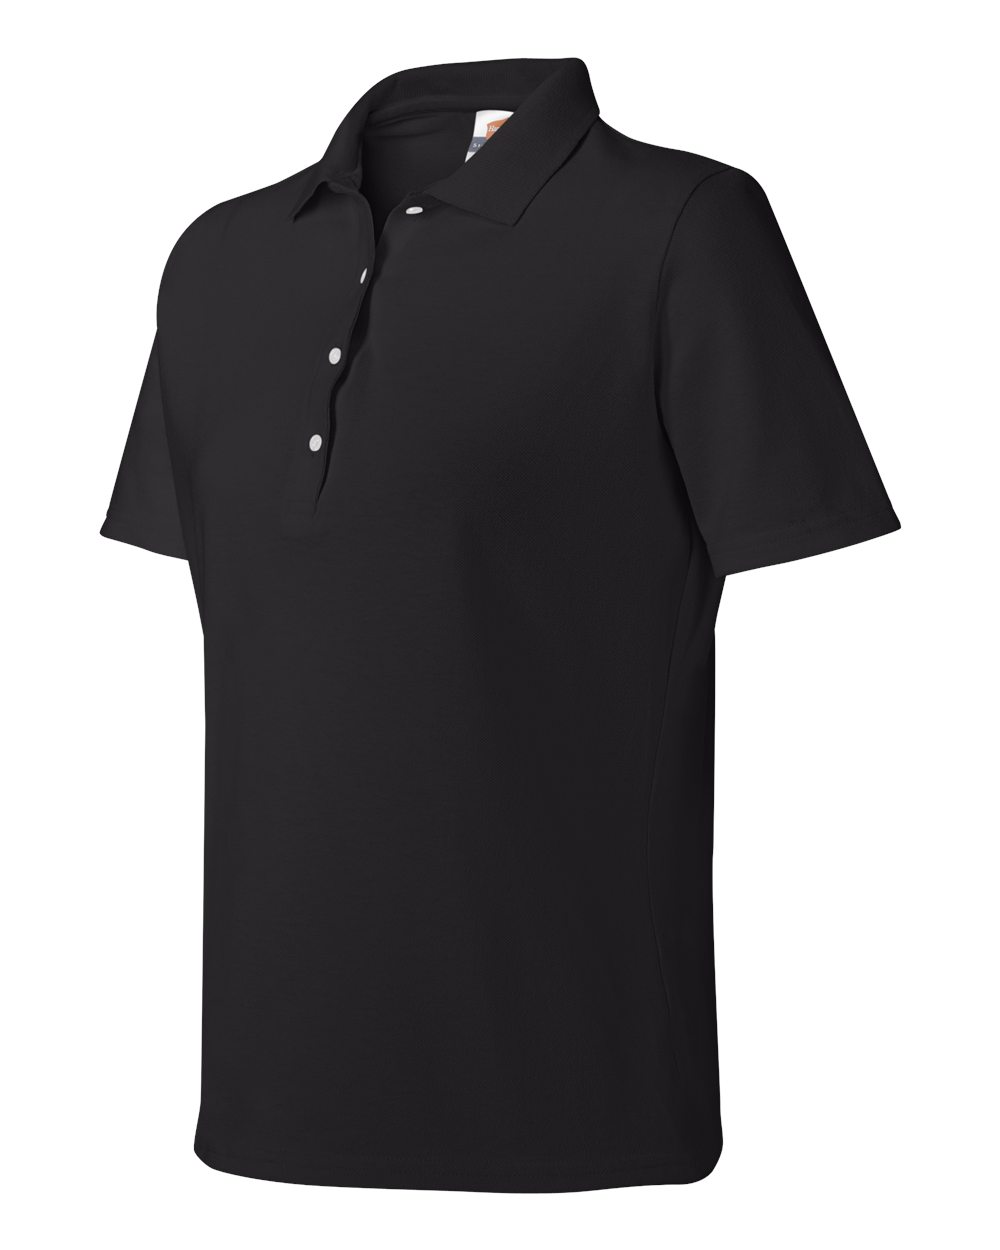 Hanes 035X - Ladies' Cotton Pique Sport Shirt